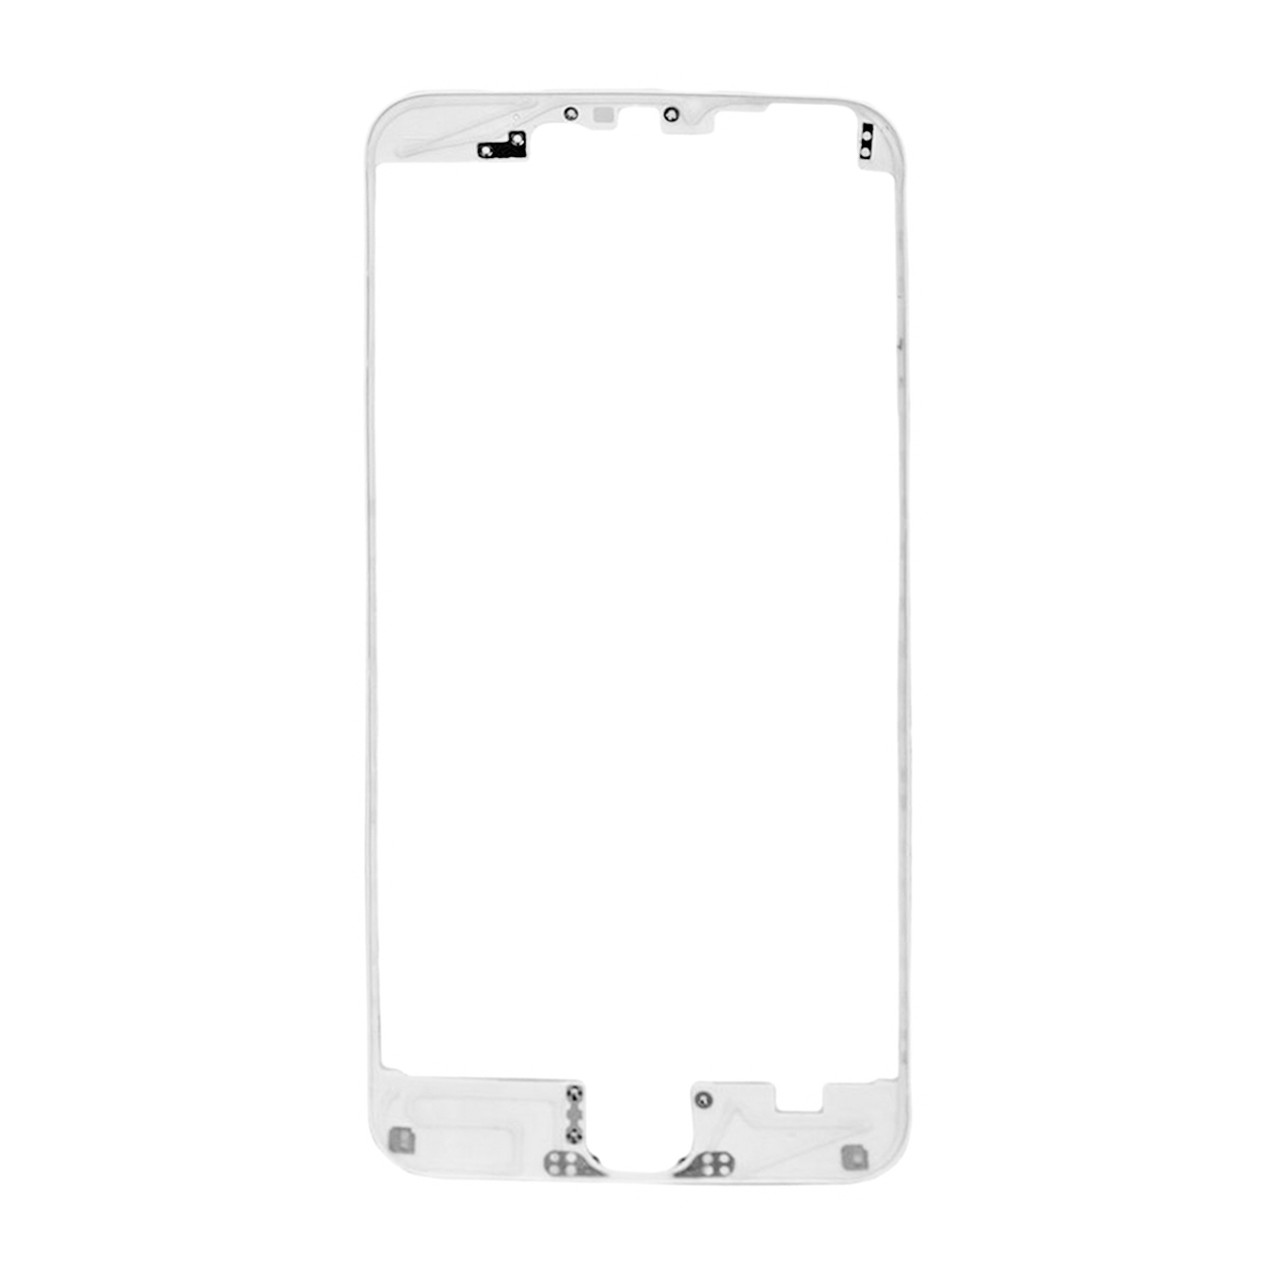 Рамка для дисплея Apple iPhone 6G Plus AAA внутренняя пустая White (10)